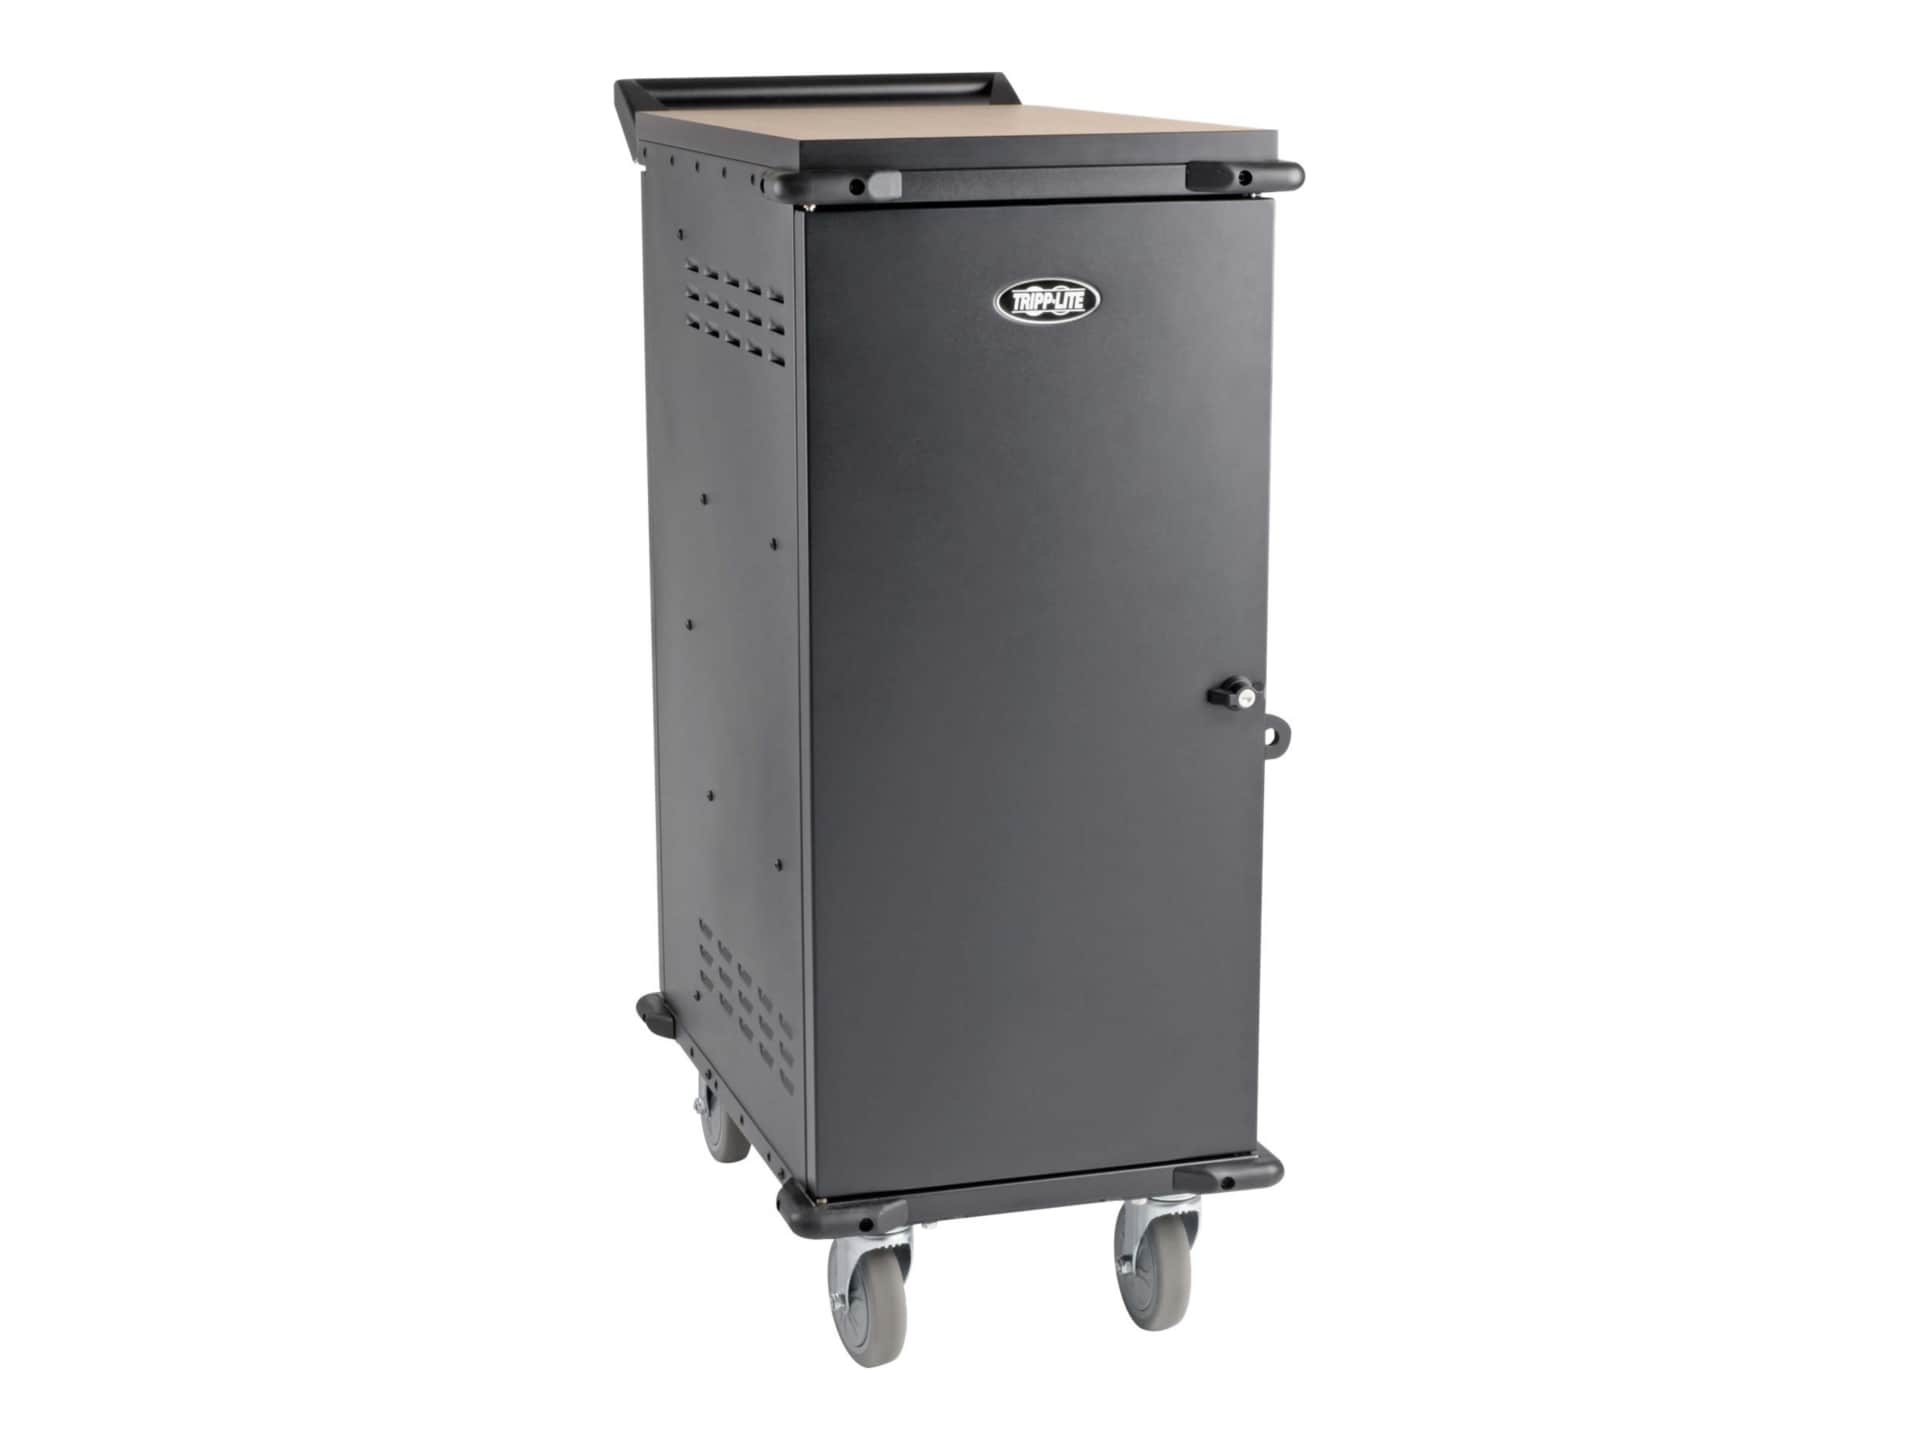 Tripp Lite 21-Device AC Charging Station for Laptops and Chromebooks - 120V, NEMA 5-15P, 10 ft. Cord, Black - cart - for